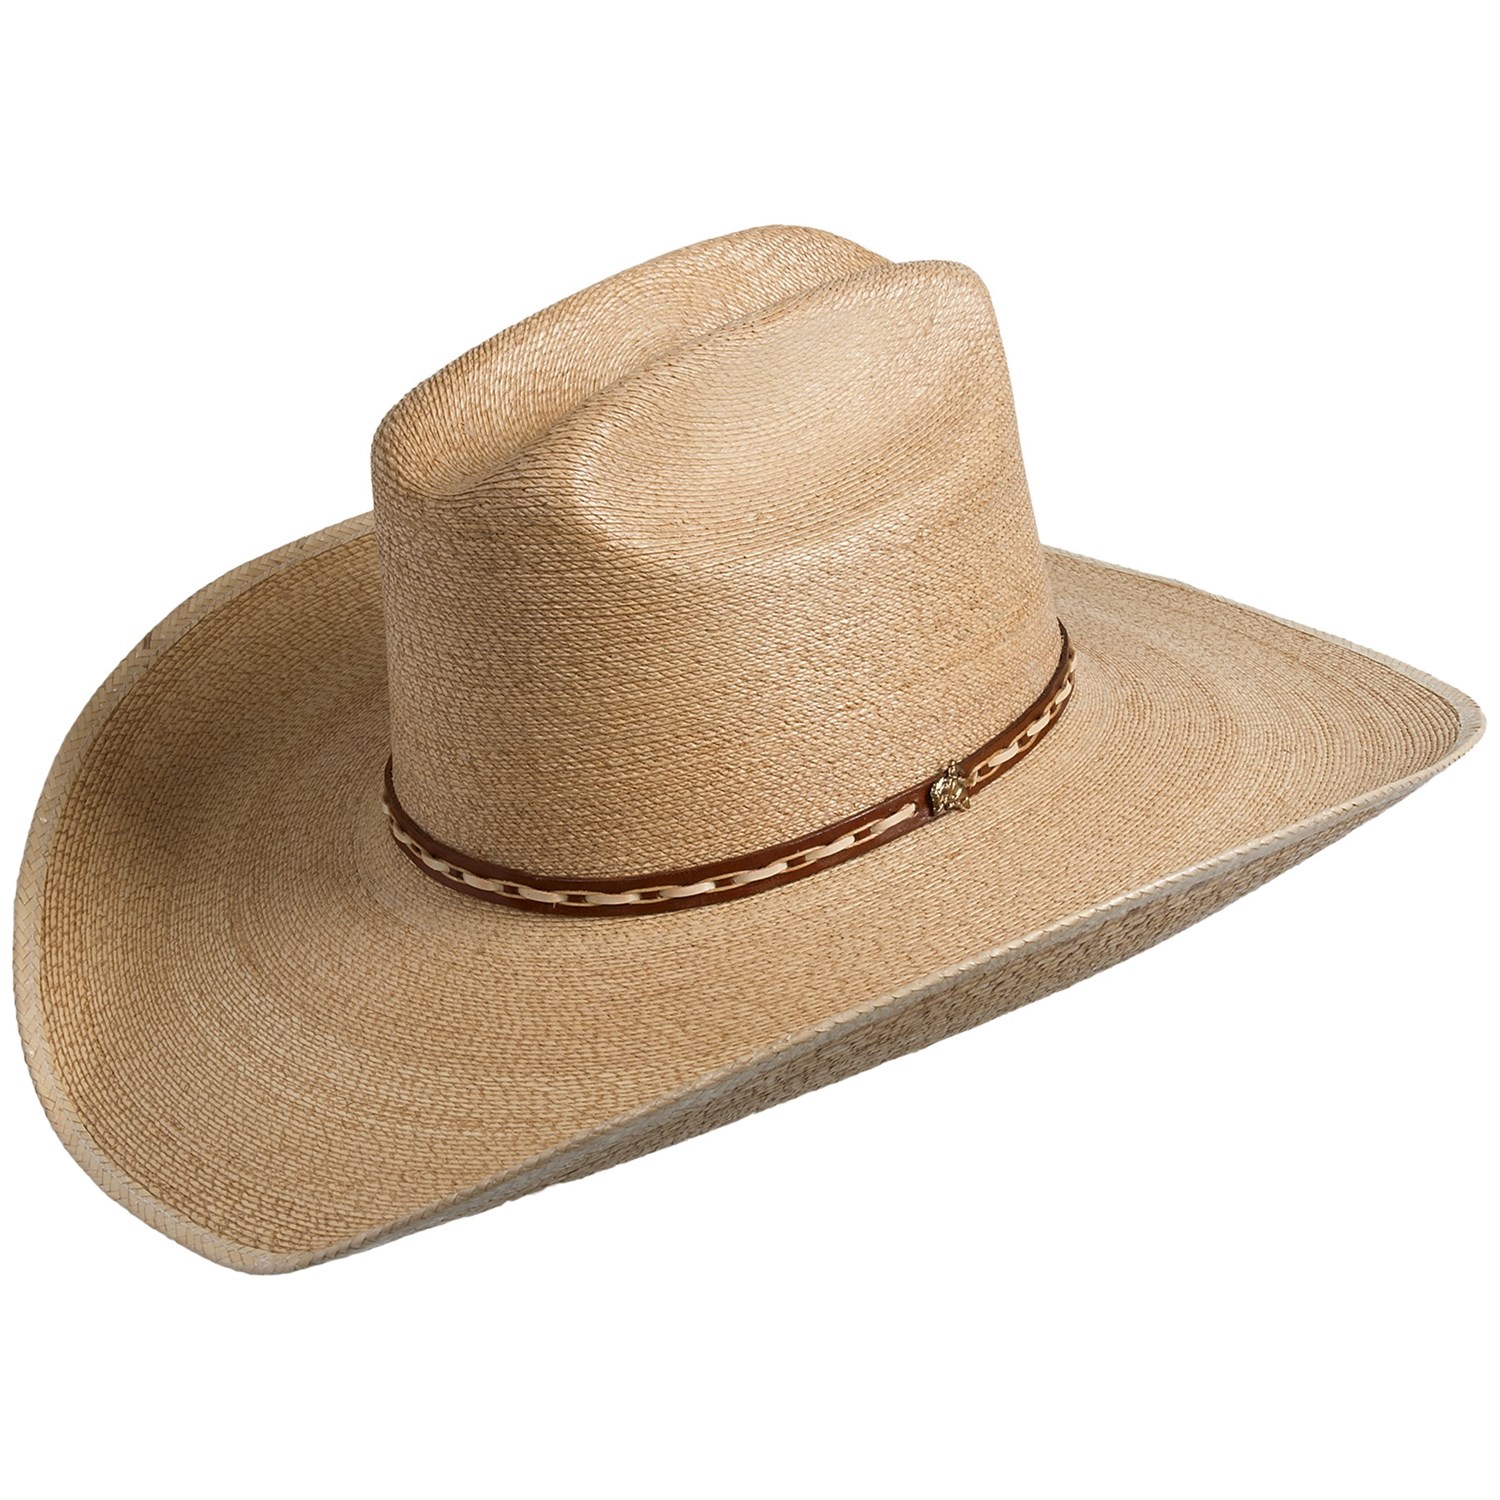 Men's Cowboy Hats: Average savings of 63% at Sierra Trading Post